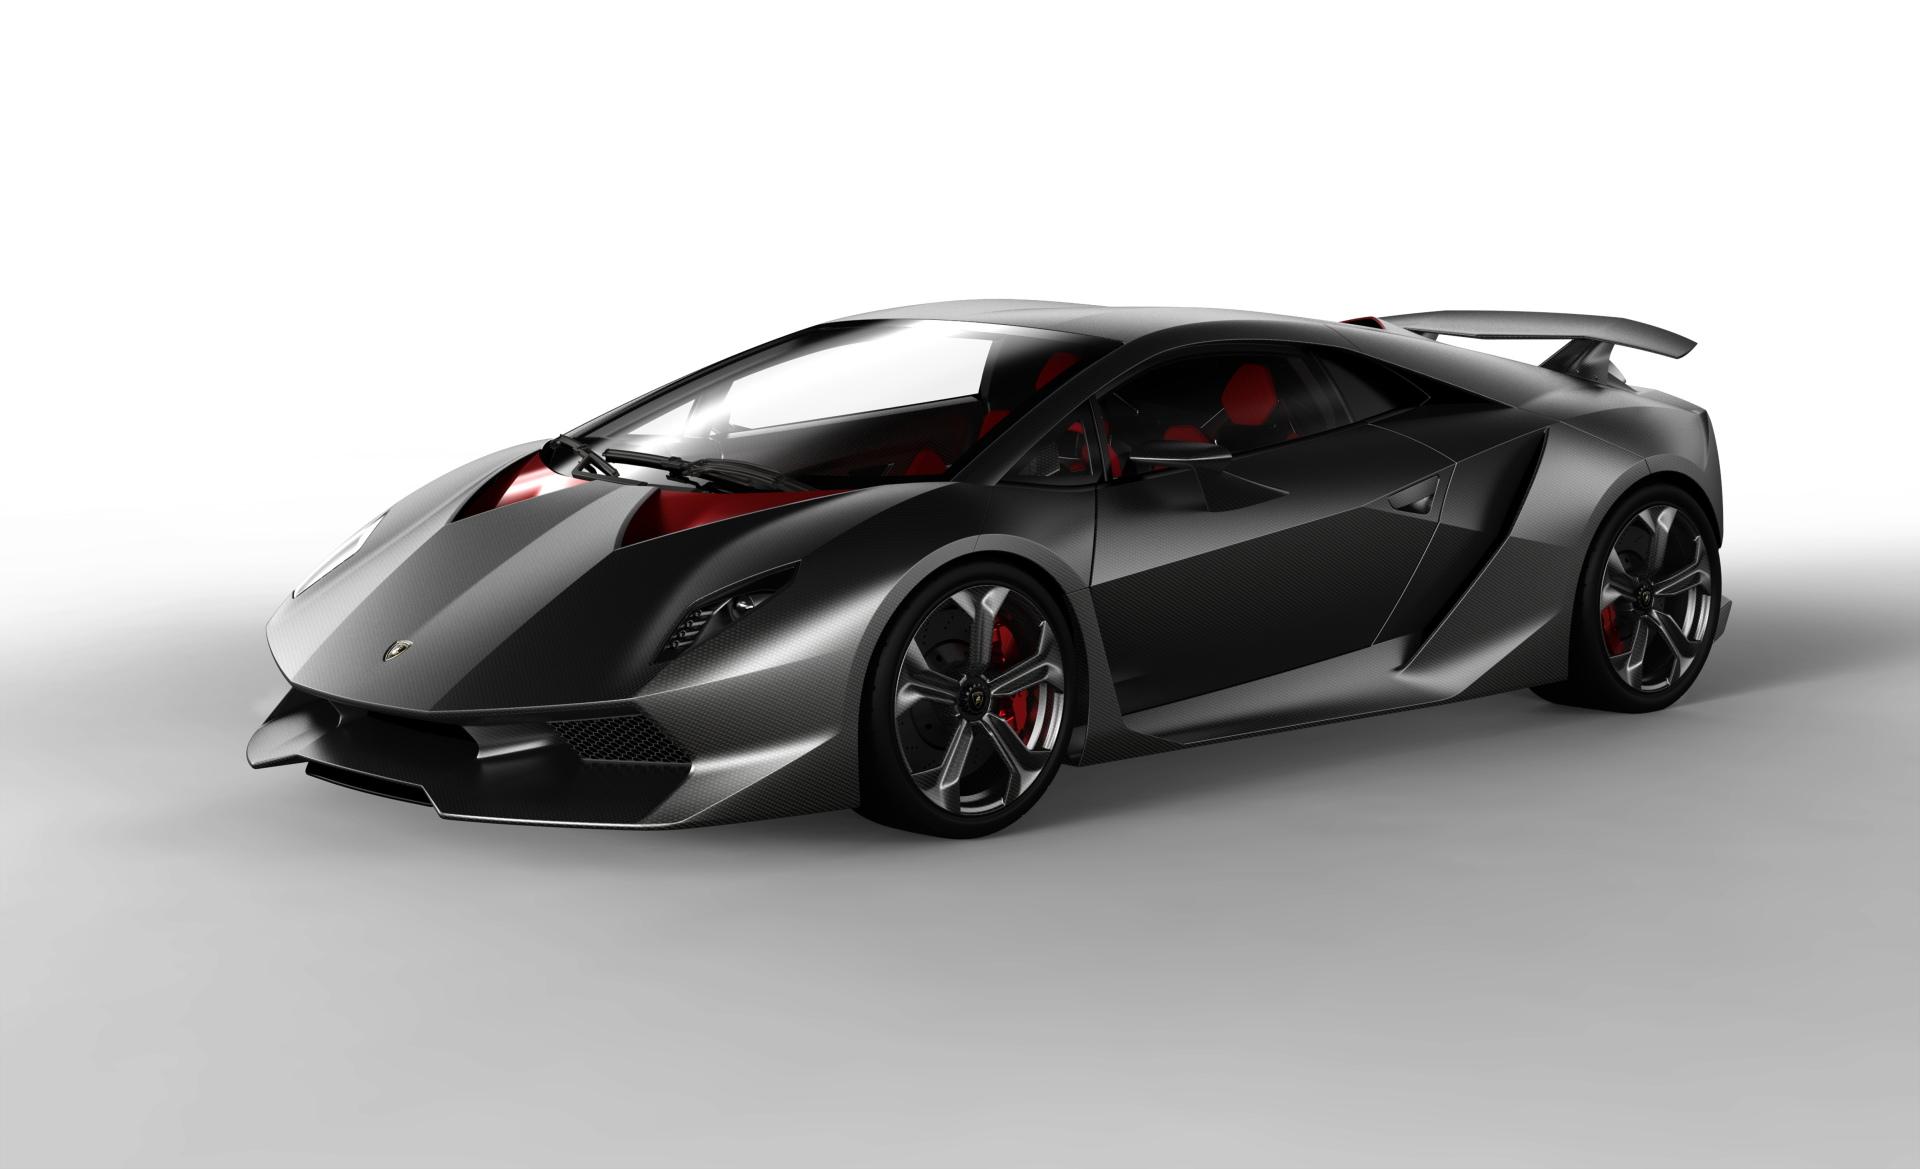 Lamborghini Sesto Elemento at 640 x 1136 iPhone 5 size wallpapers HD quality